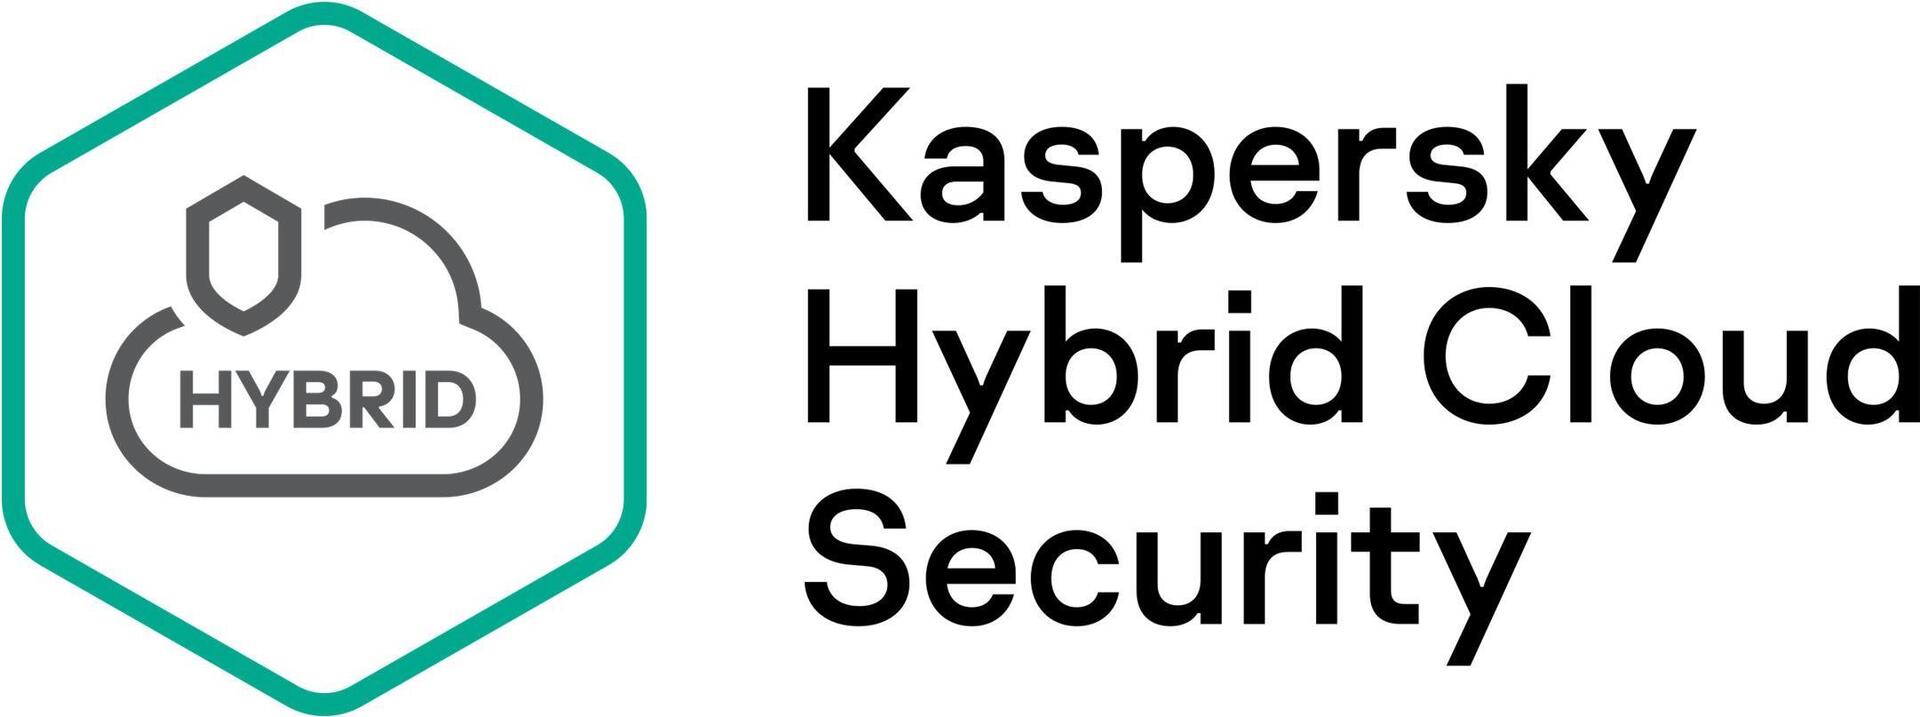 Kaspersky Hybrid Cloud Security Desktop (KL4155XANT8)